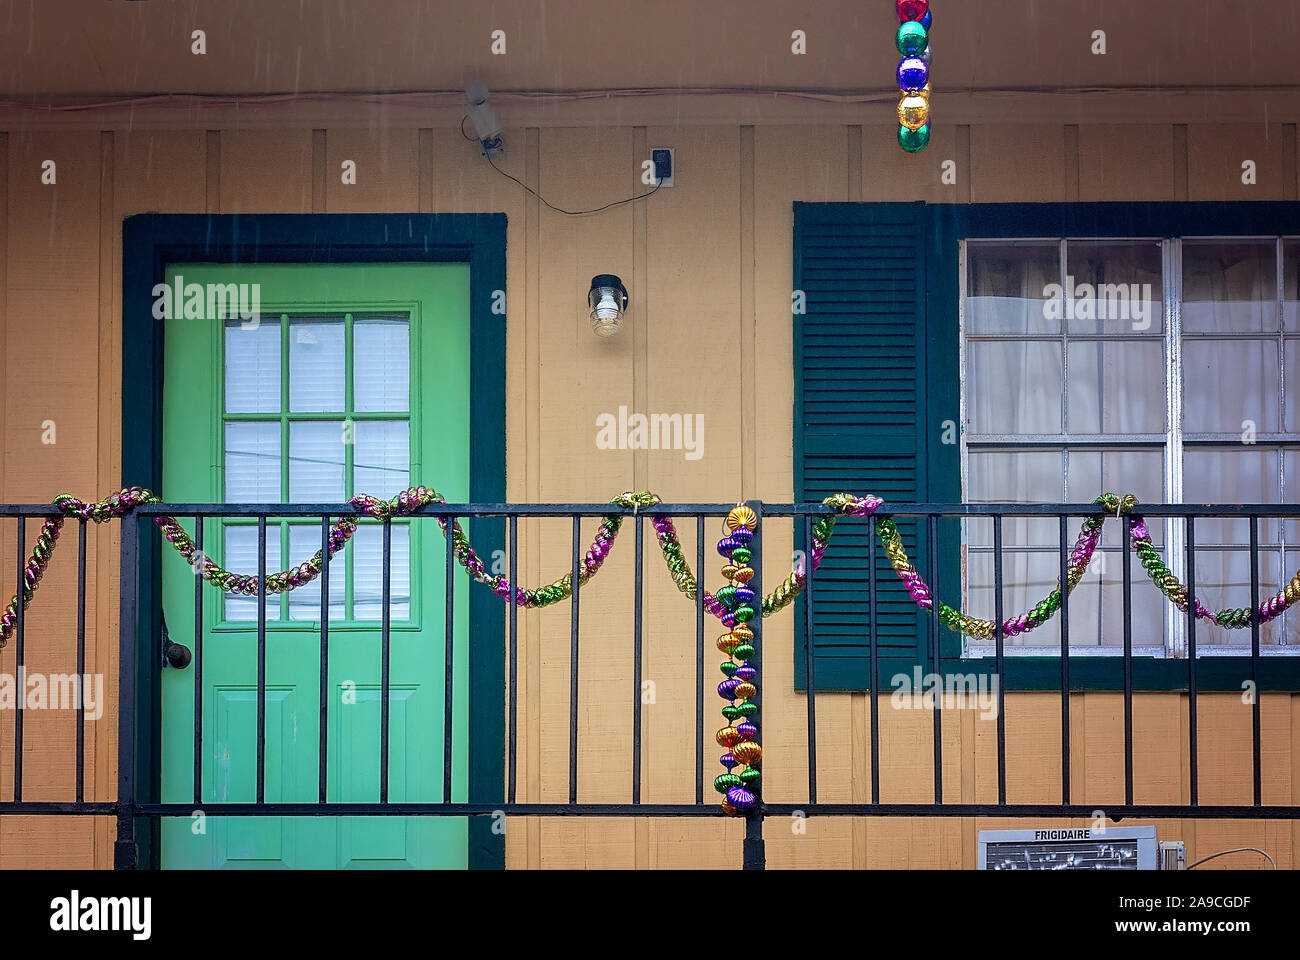 A Mardi Gras garland hangs from a balcony at Value Travel Inn, February 4, 2010, in Slidell, Louisiana. Stock Photo